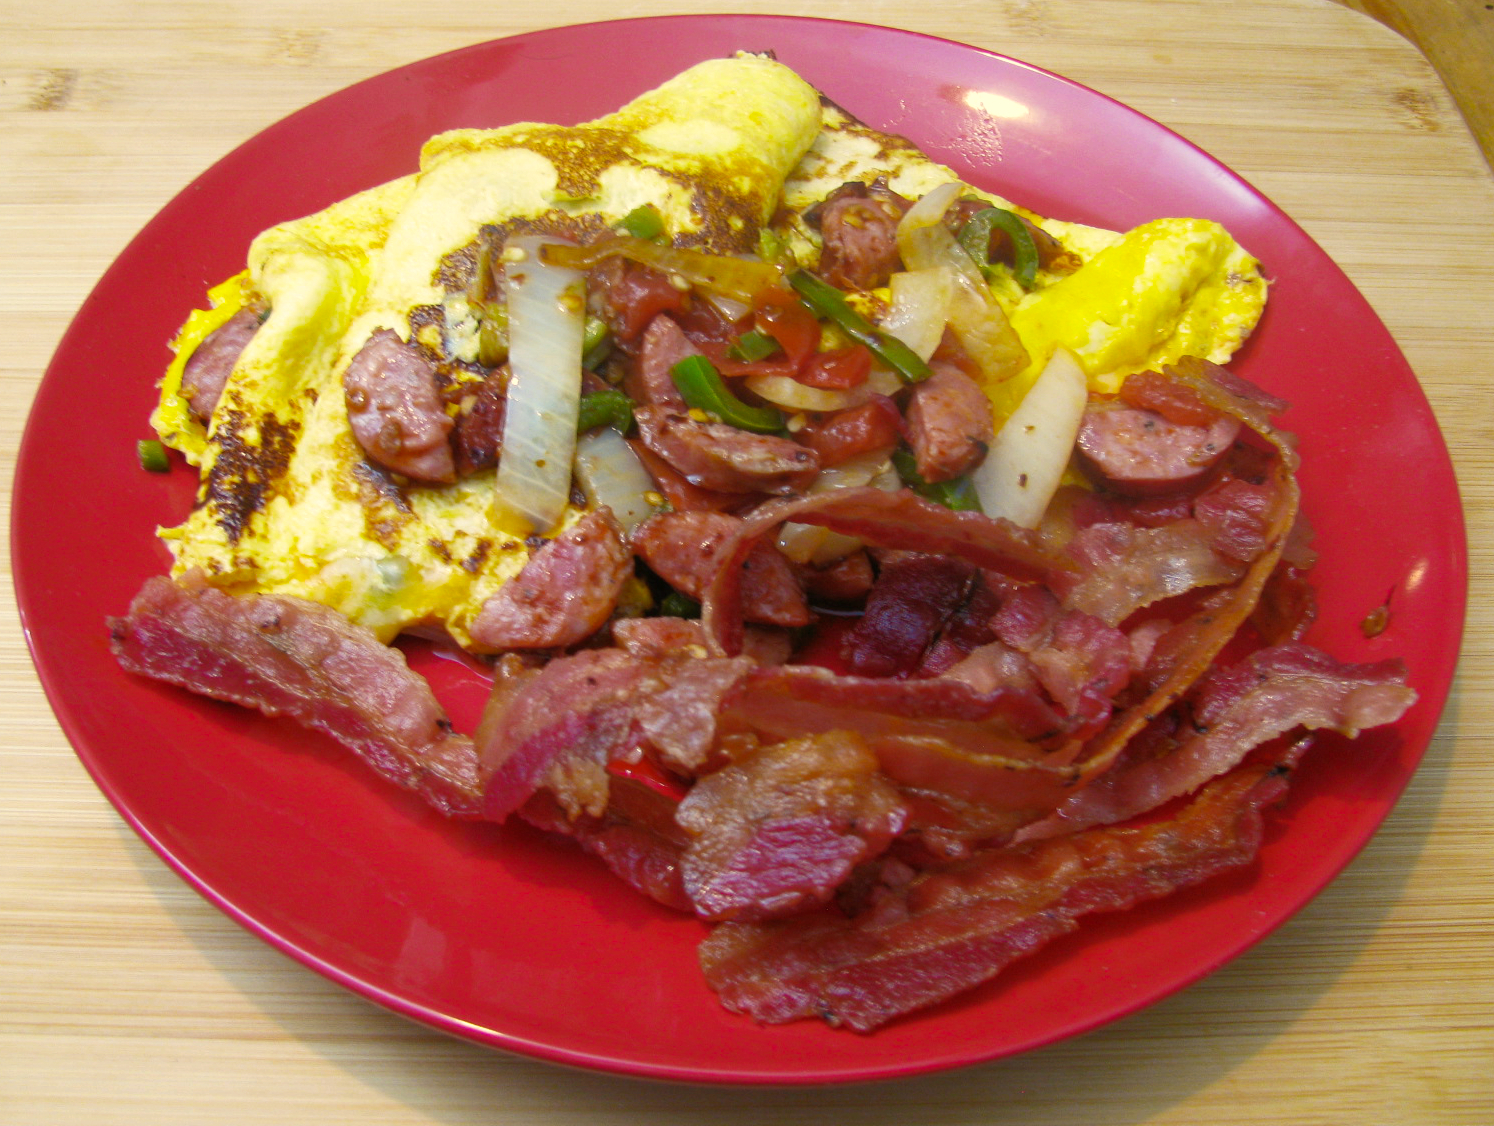 Bratwurst Omelette with Bacon